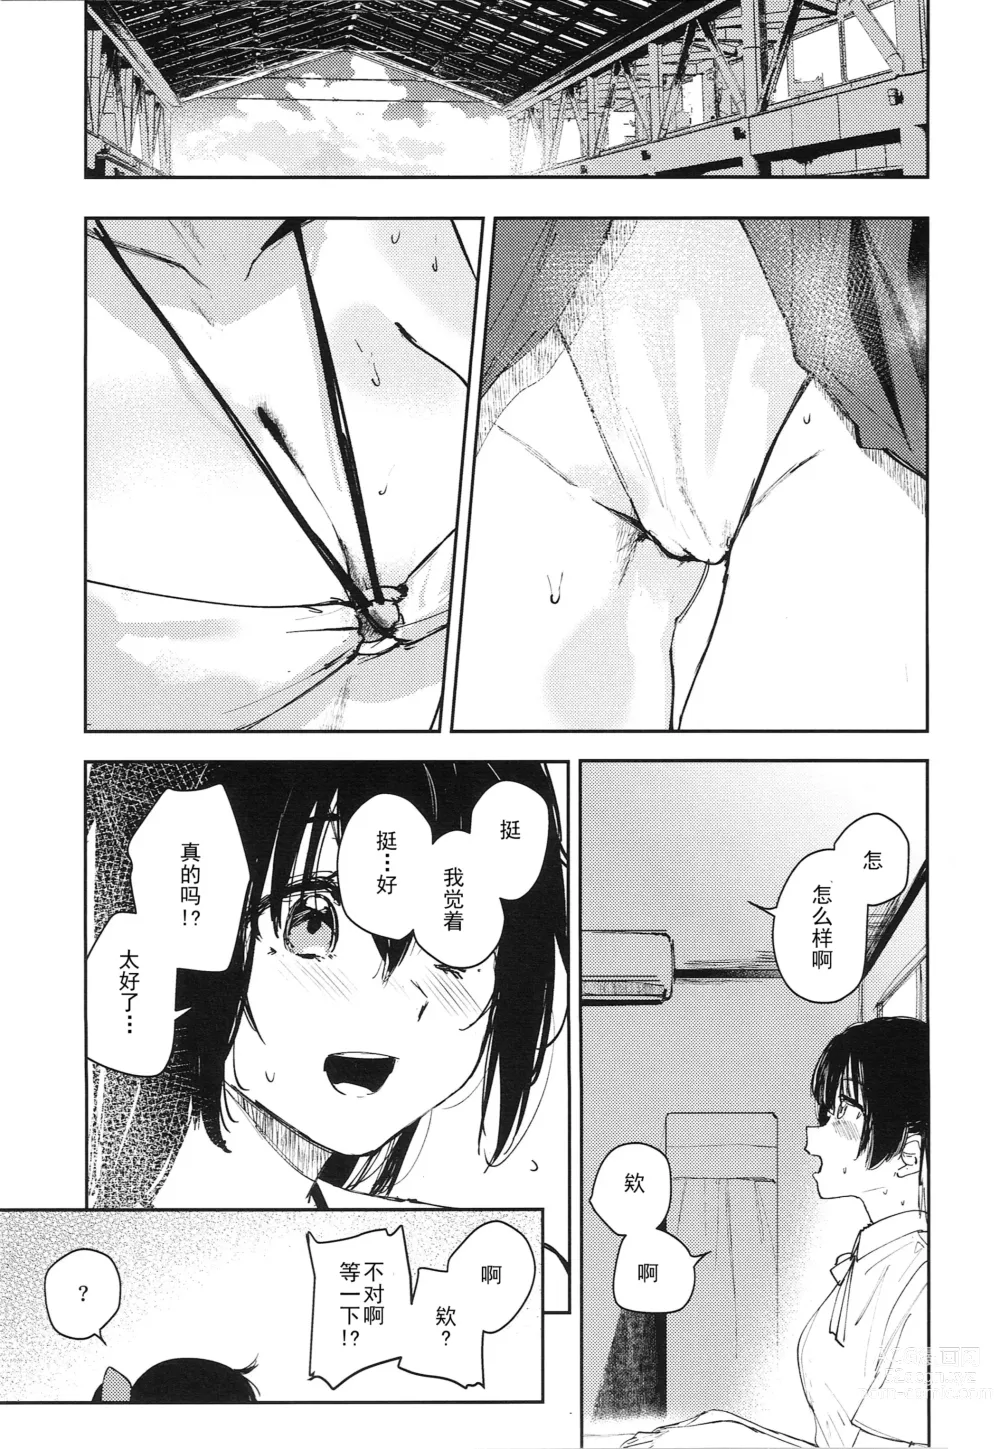 Page 13 of doujinshi Aoku Iroasero